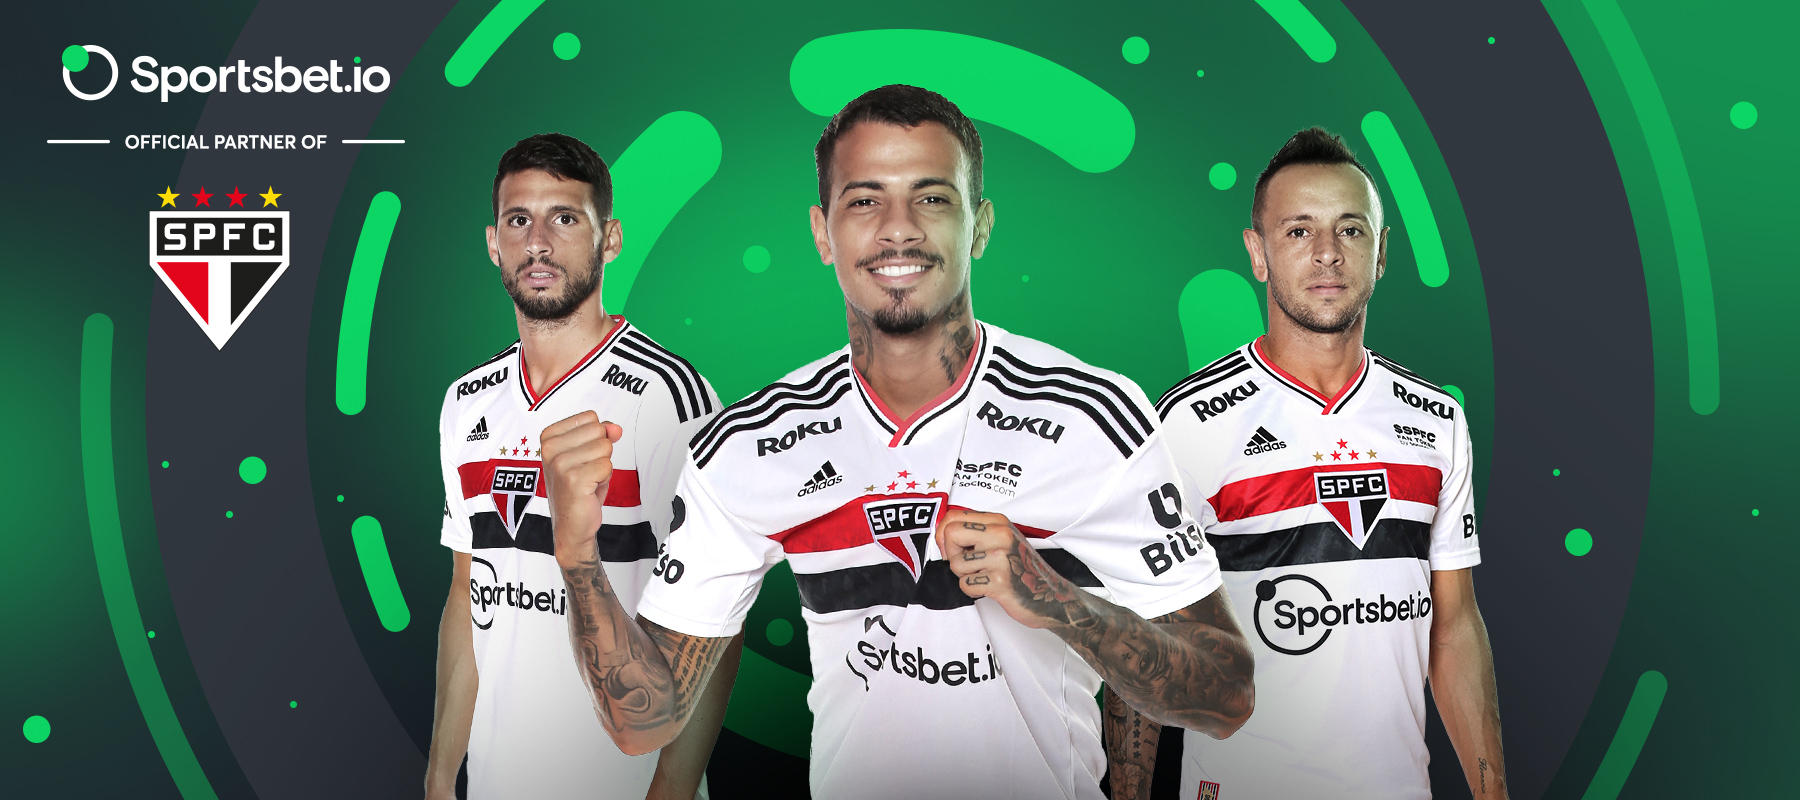 Rencontrez les partenaires de Sportsbet.io : São Paulo FC